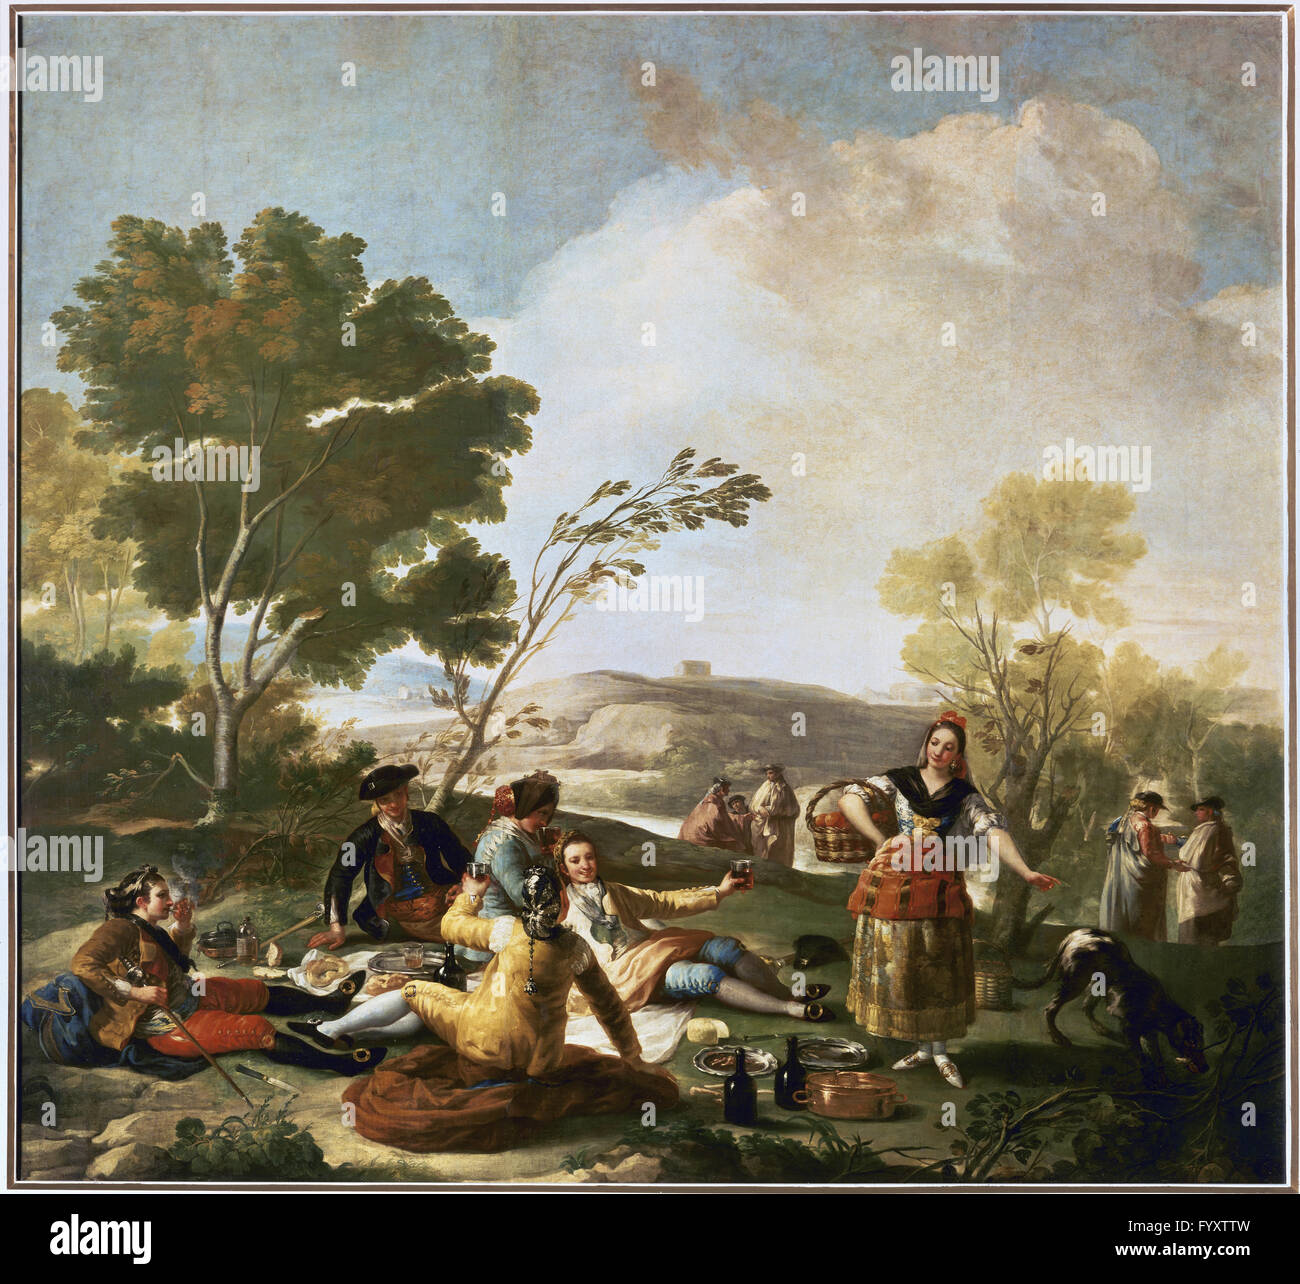 Francisco de Goya y Lucientes (1746-1828). Spanischer Maler. Das Picknick, 1776. Prado-Museum. Madrid. Spanien. Stockfoto